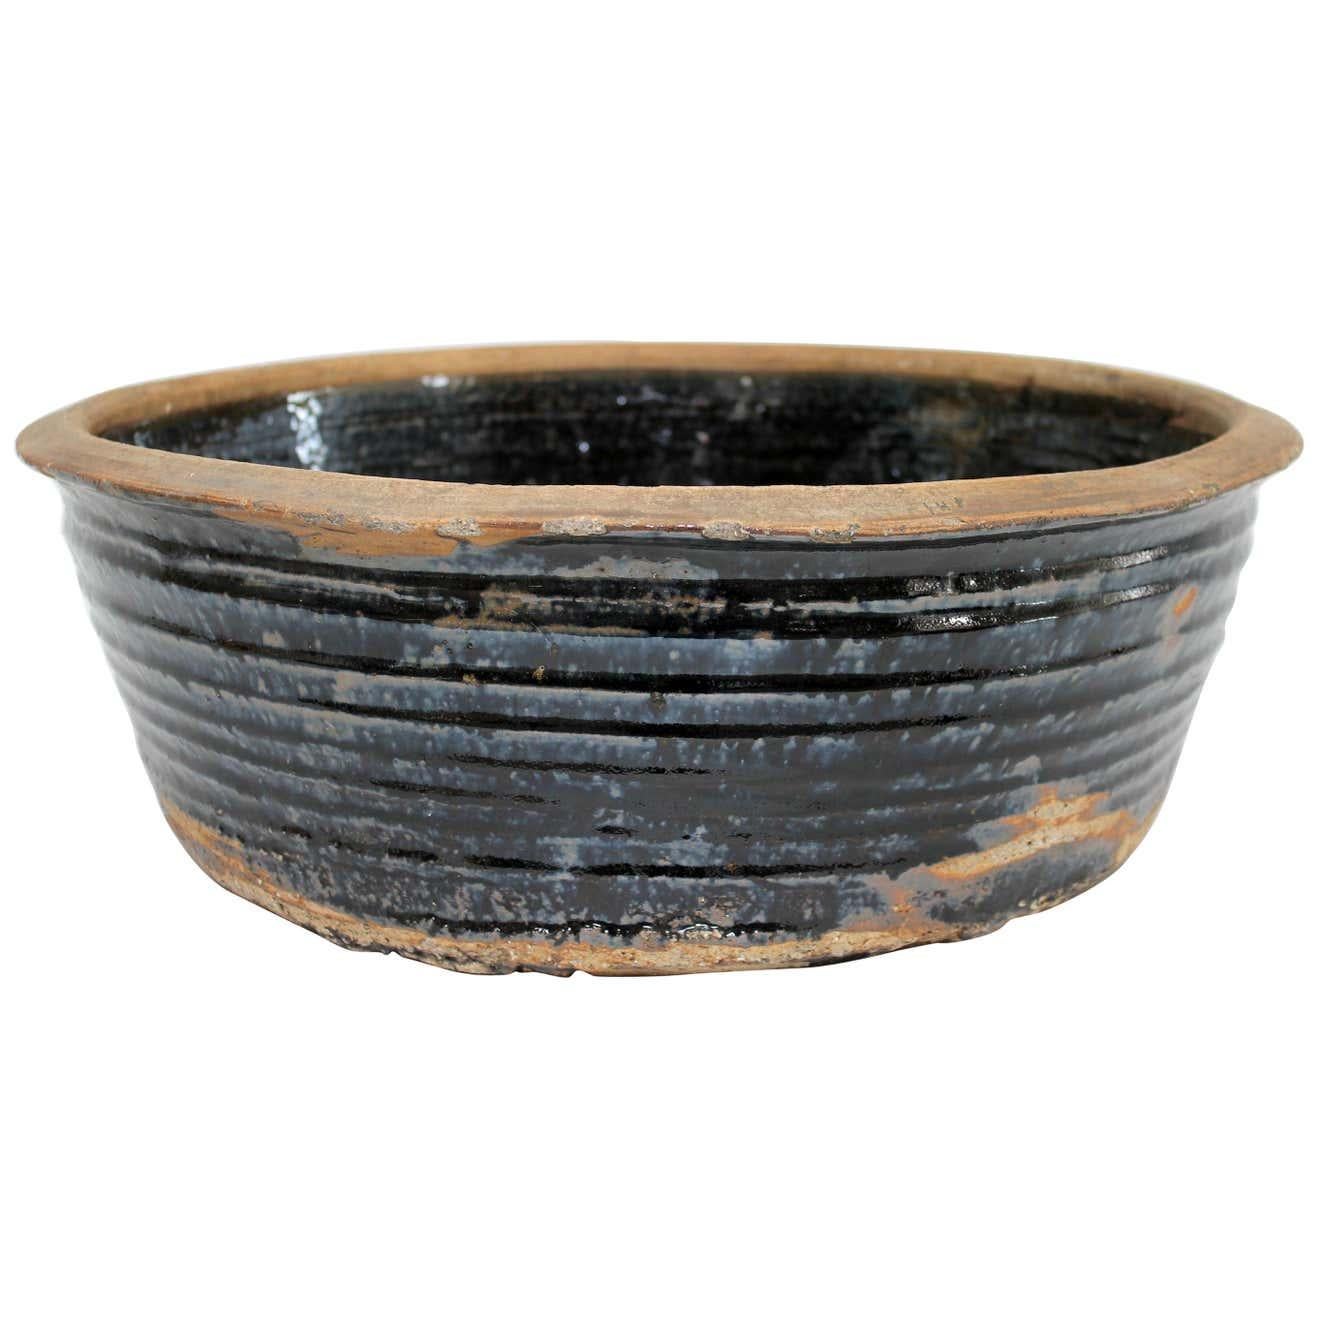 Large vintage black glazed terracotta bowl
Size: 20